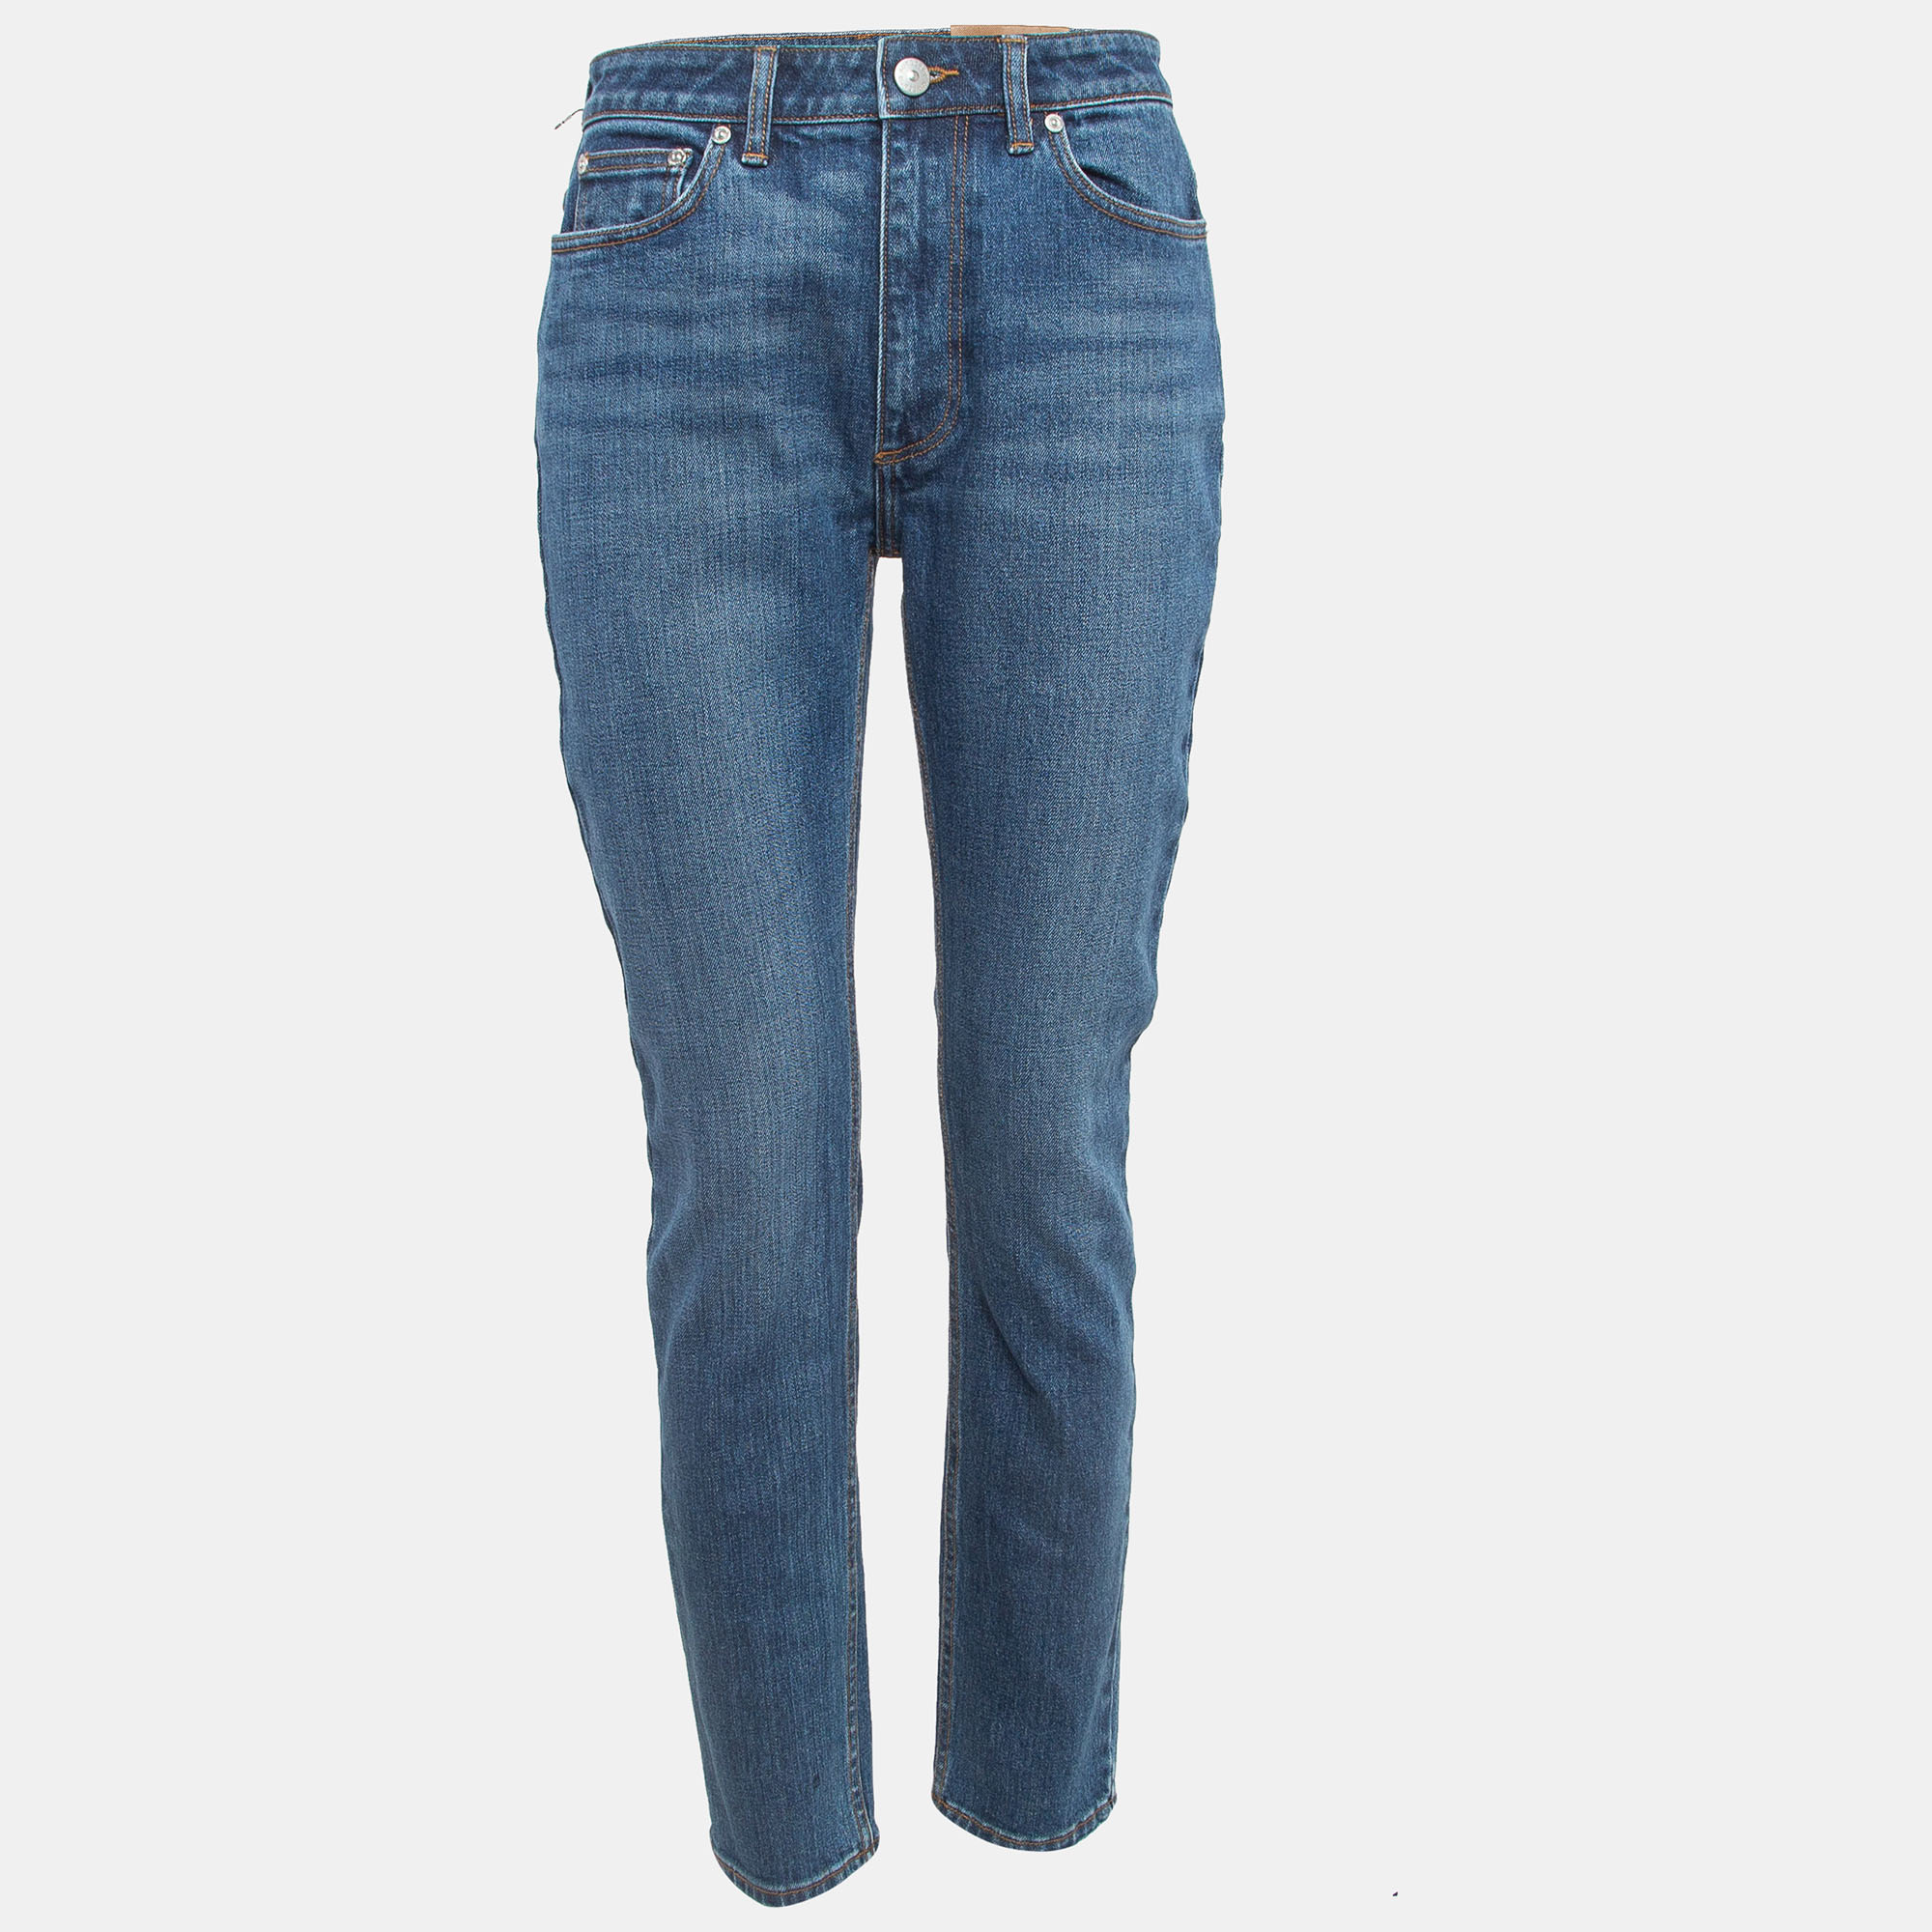 Burberry blue denim mid-rise skinny jeans m waist 29"